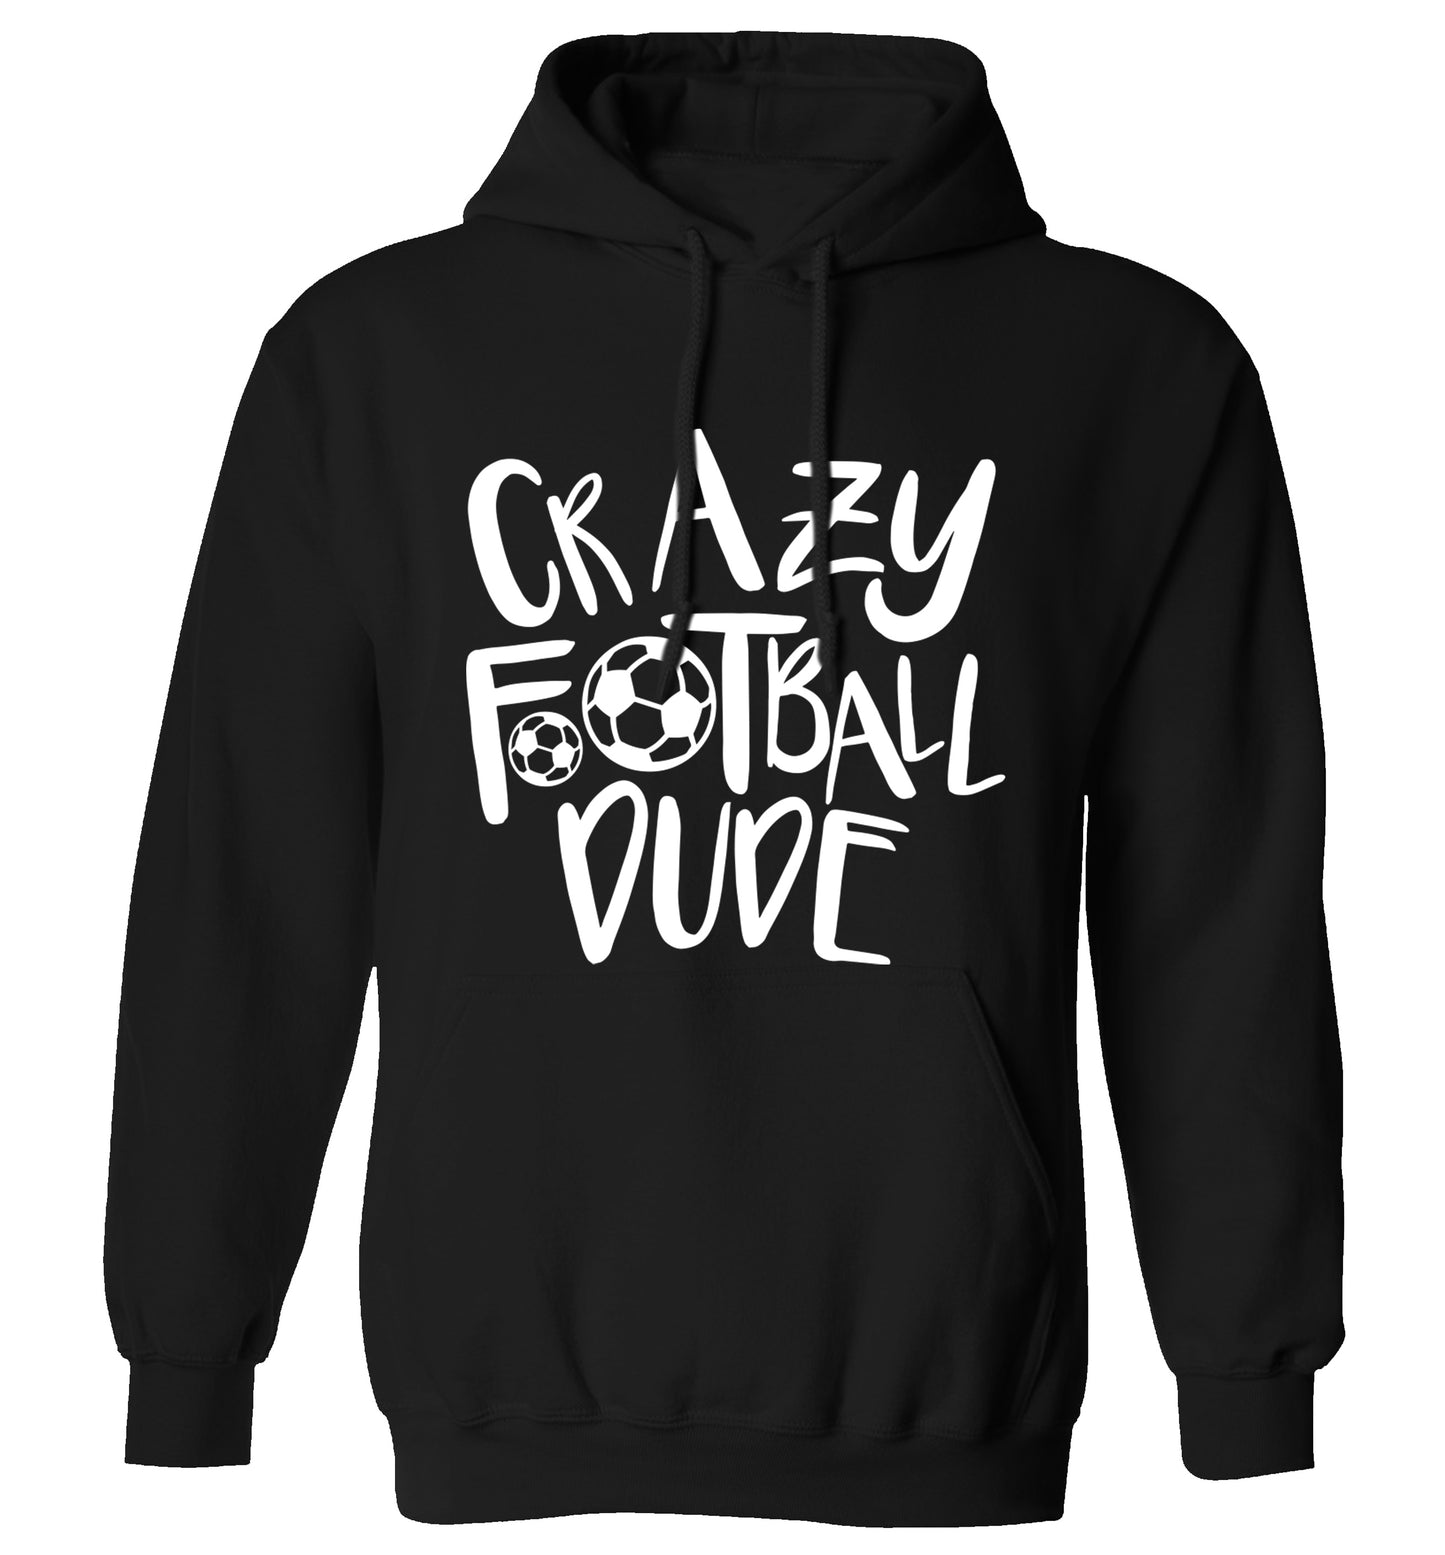 Crazy football dude adults unisexblack hoodie 2XL